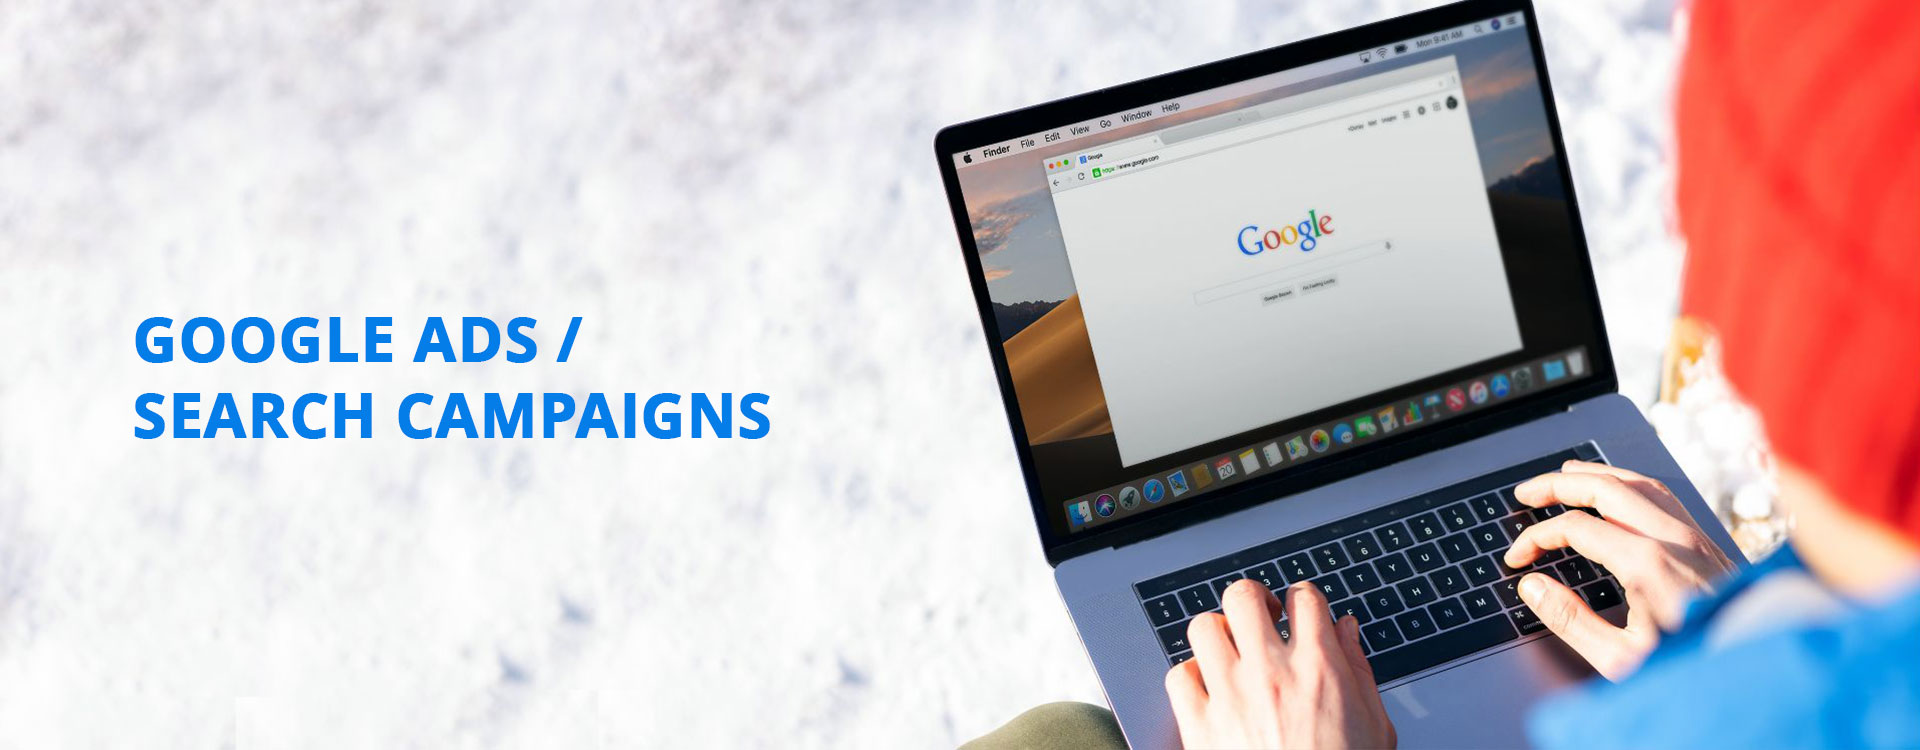 Google Ads / Search Campaigns